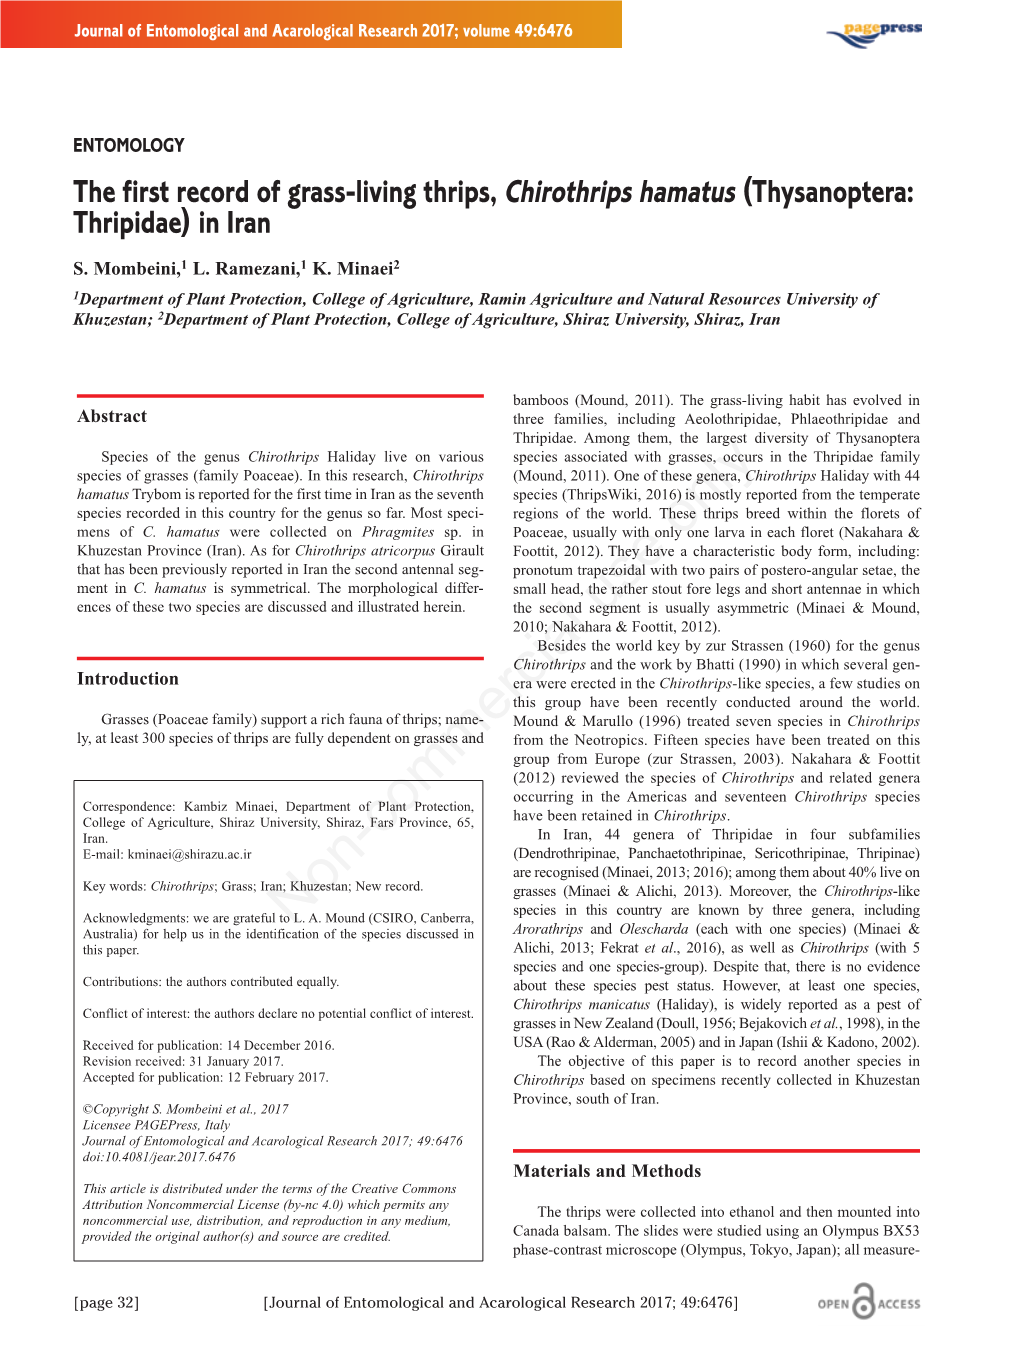 The First Record of Grass-Living Thrips, Chirothrips Hamatus (Thysanoptera: Thripidae) in Iran